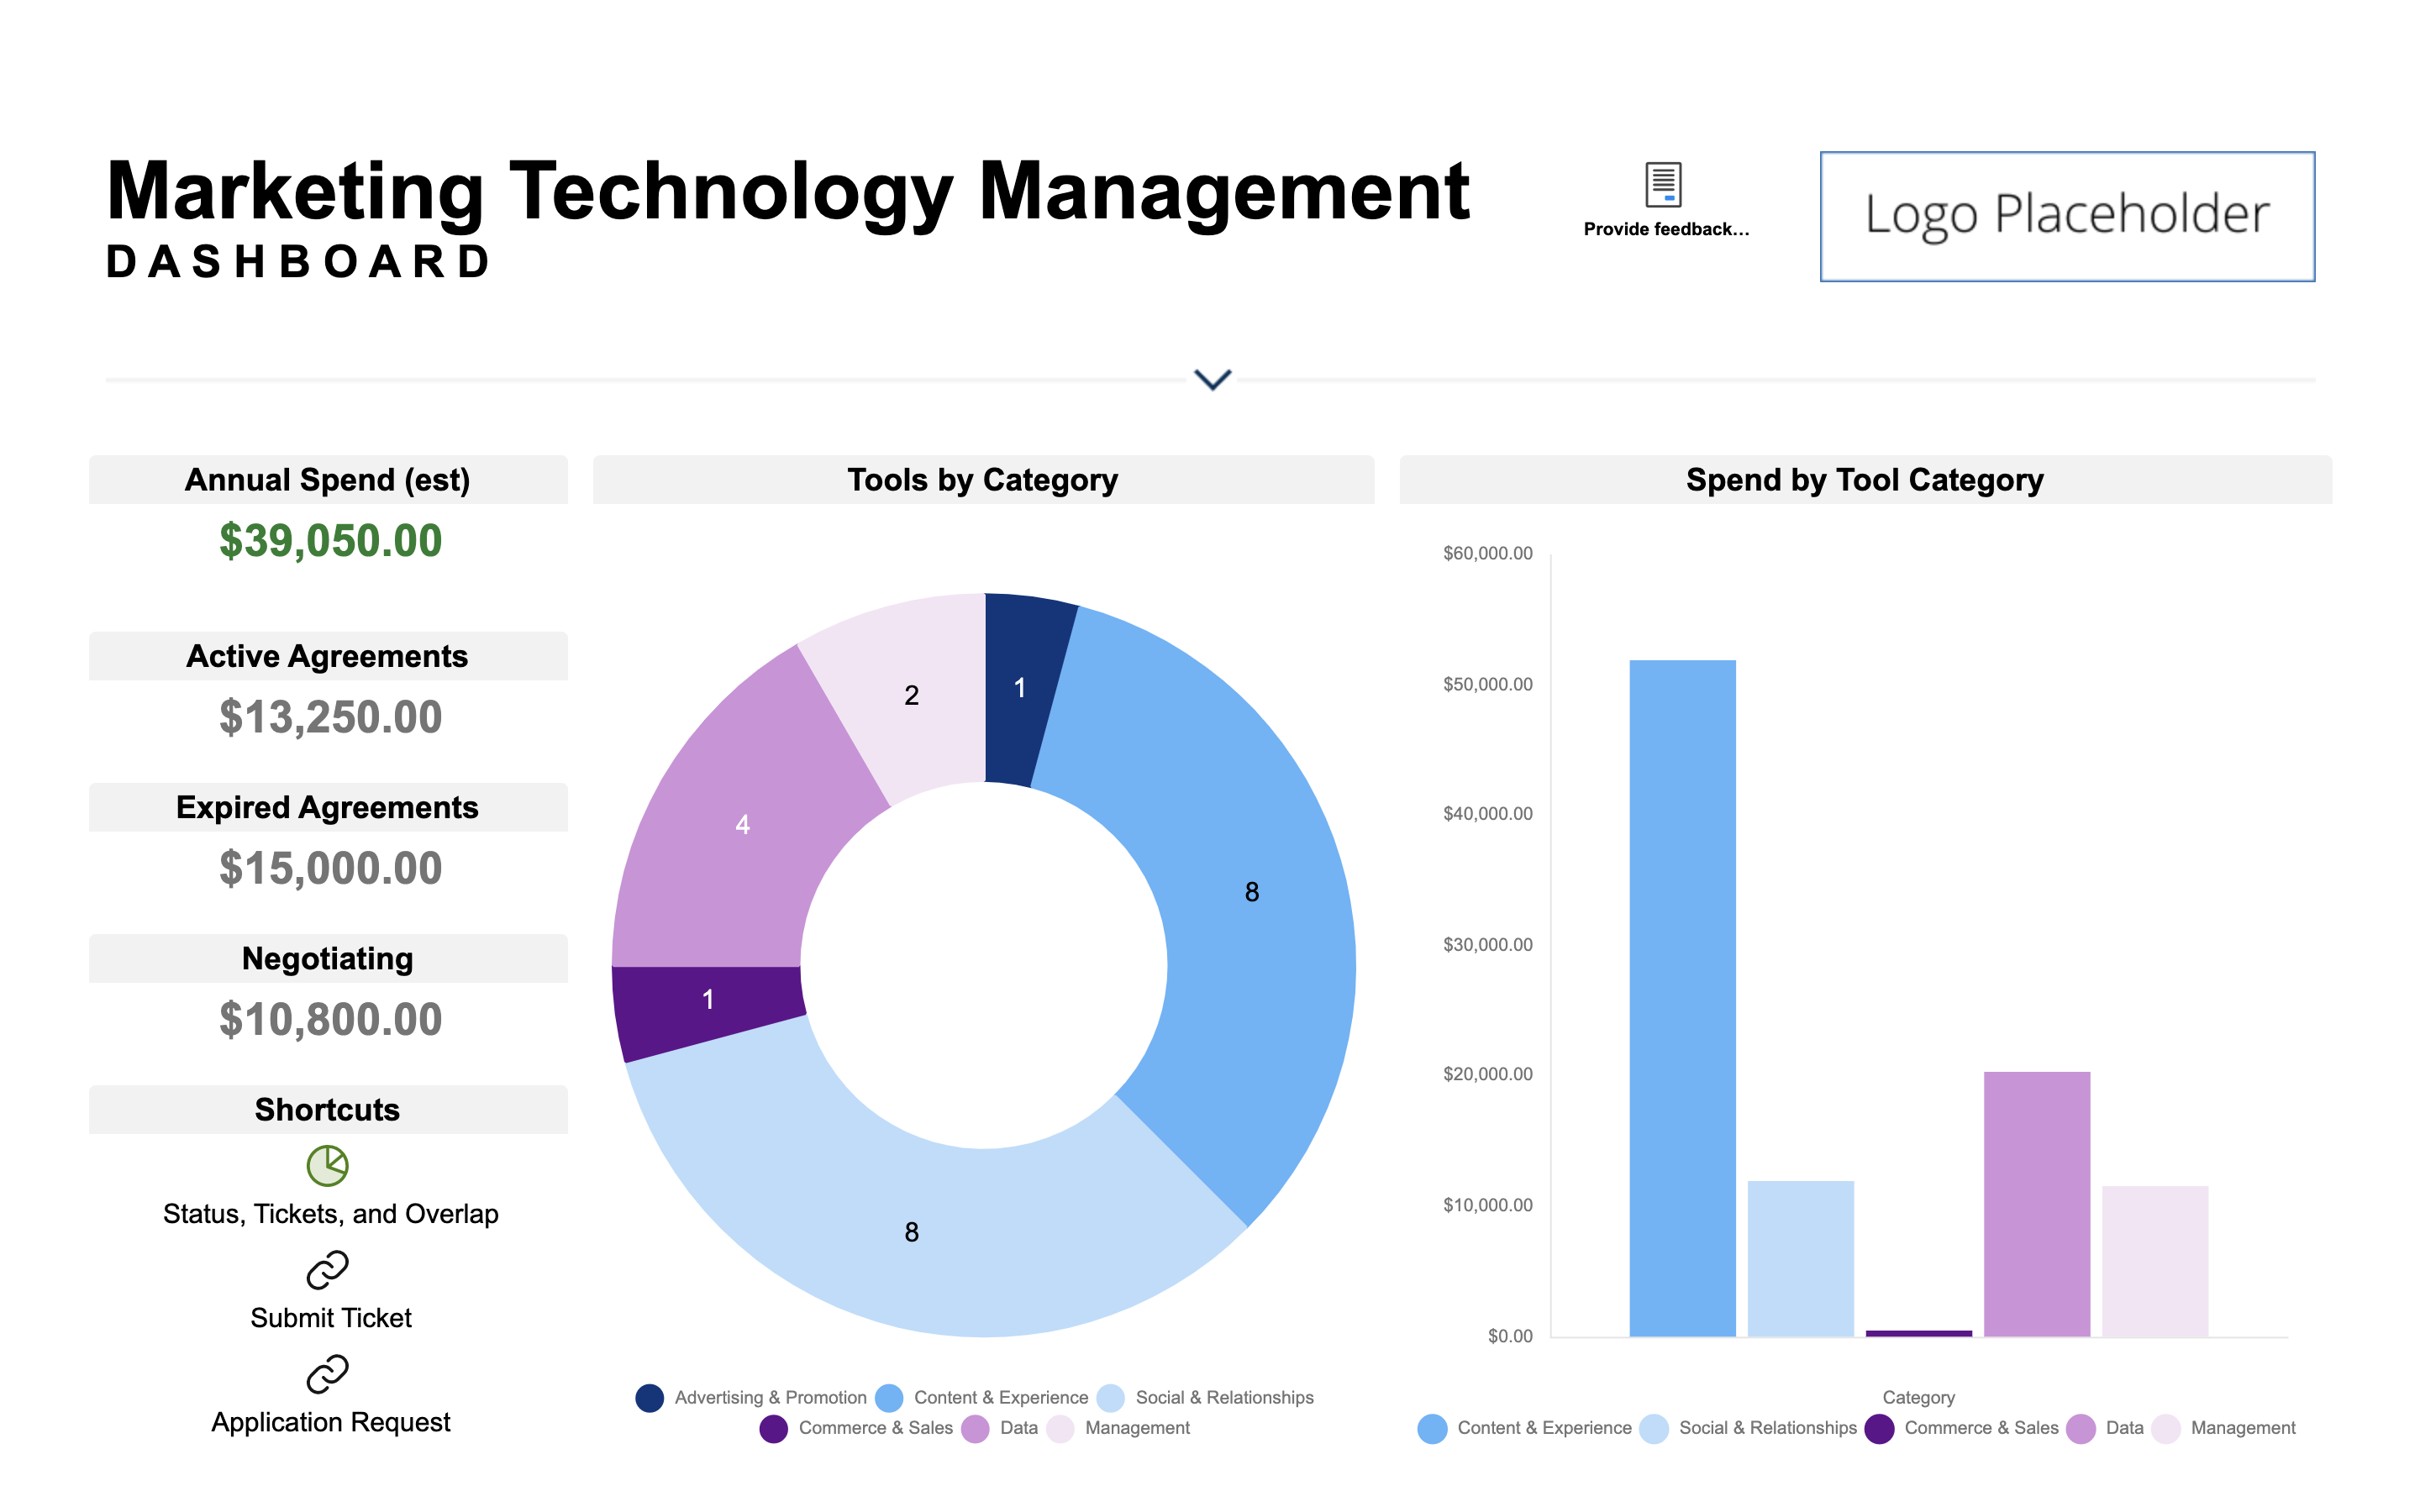 Marketing Technology Management Dashboard